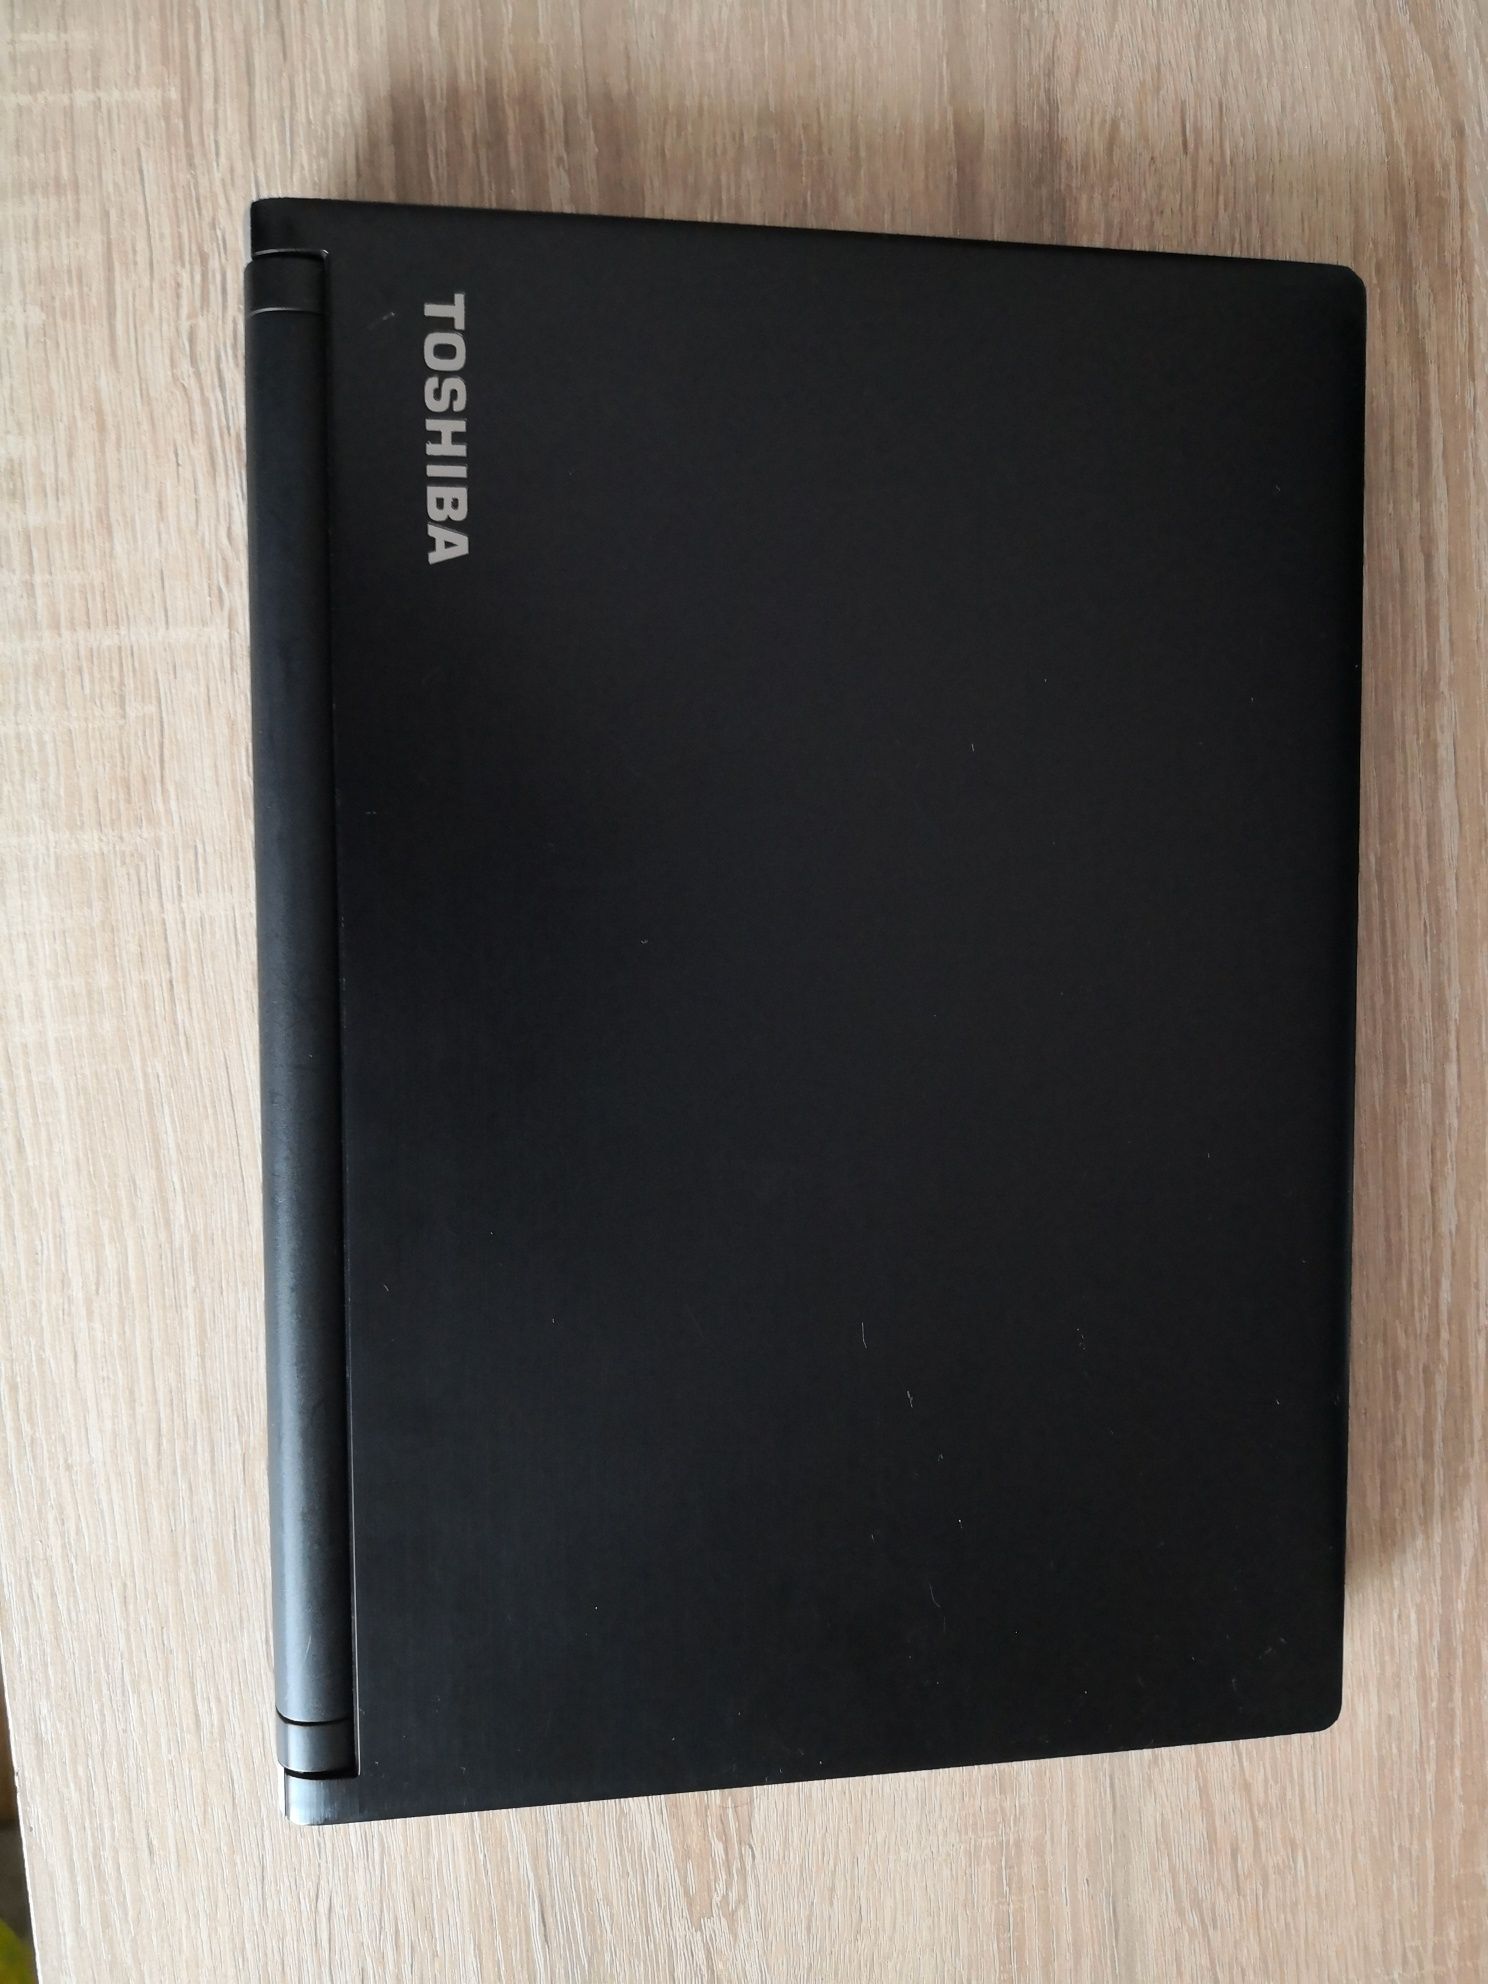 Toshiba Portege A30-C i5-6th, 8GB RAM, DVD, WIN 10